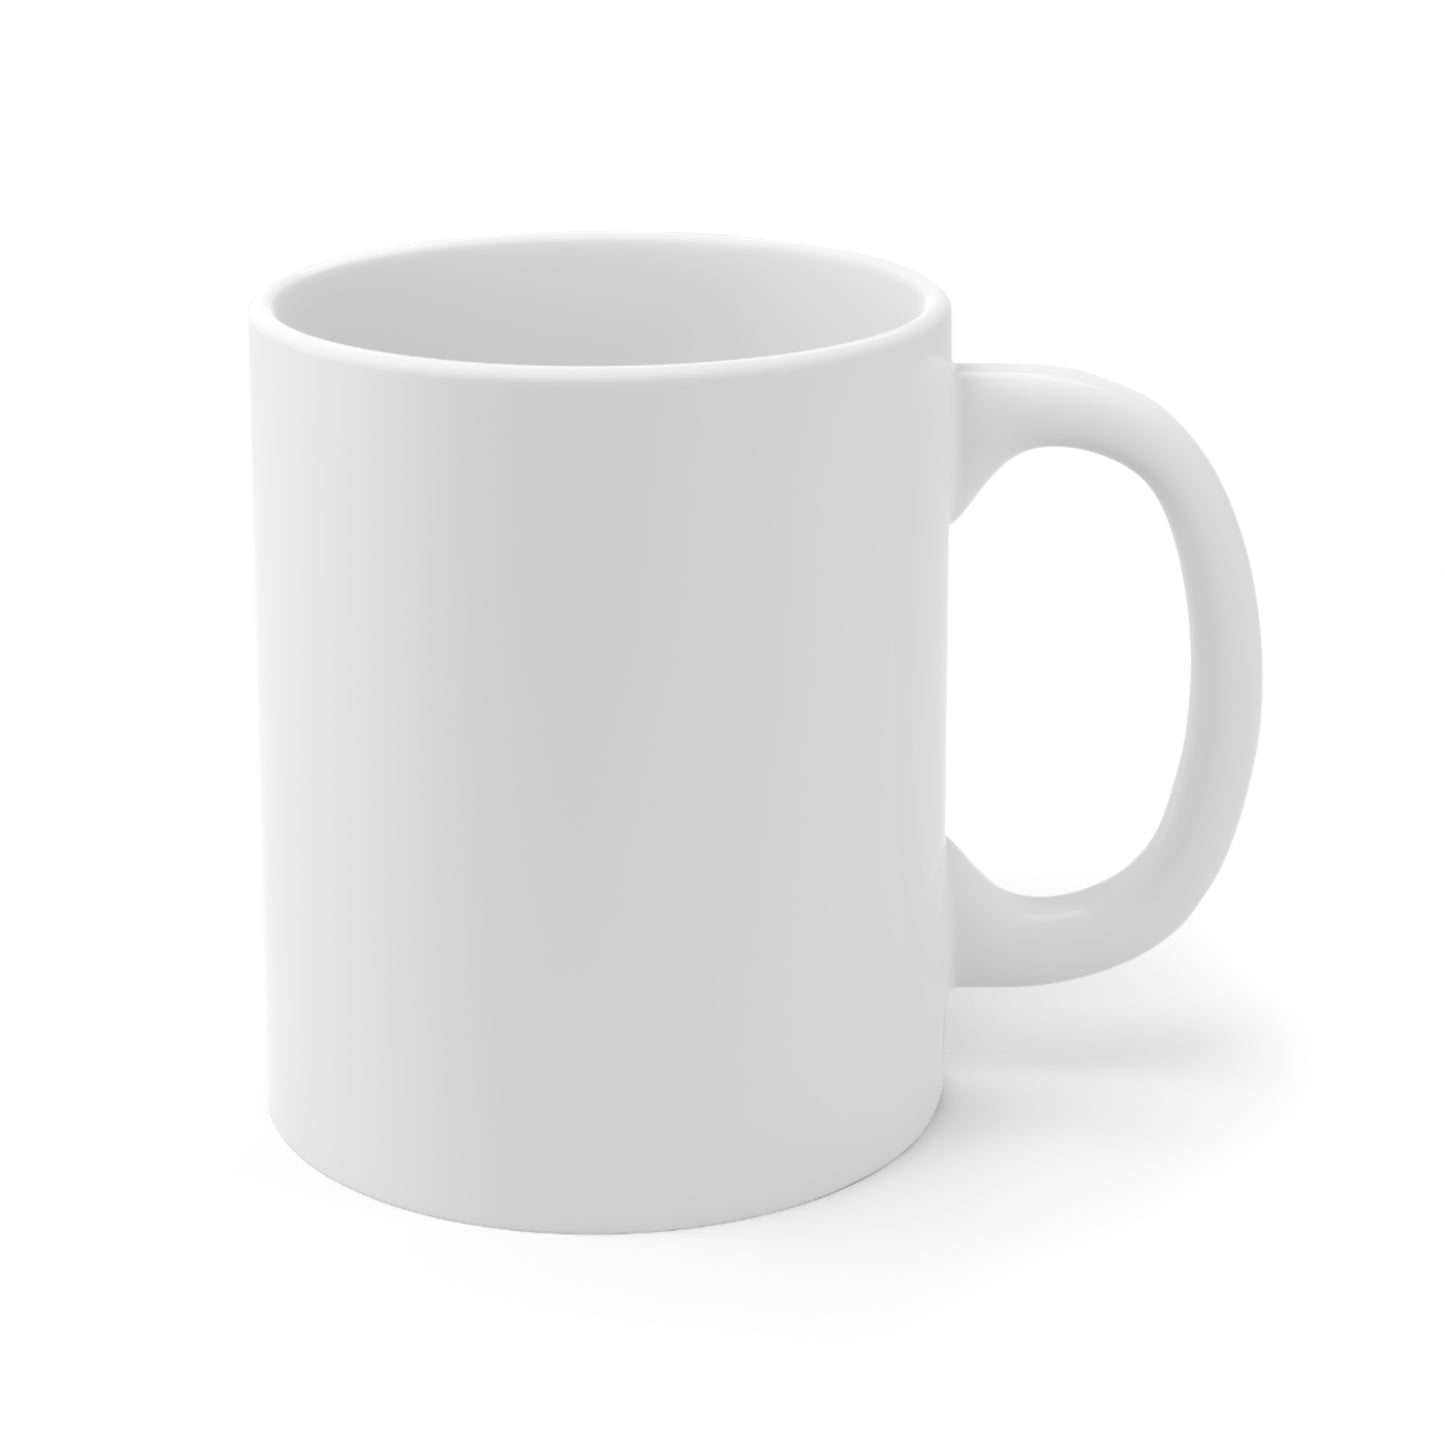 Ceramic Mug Pray Wait Trust // Inspirational Mug Coffee Mug Tea Mug Water Cup 11oz